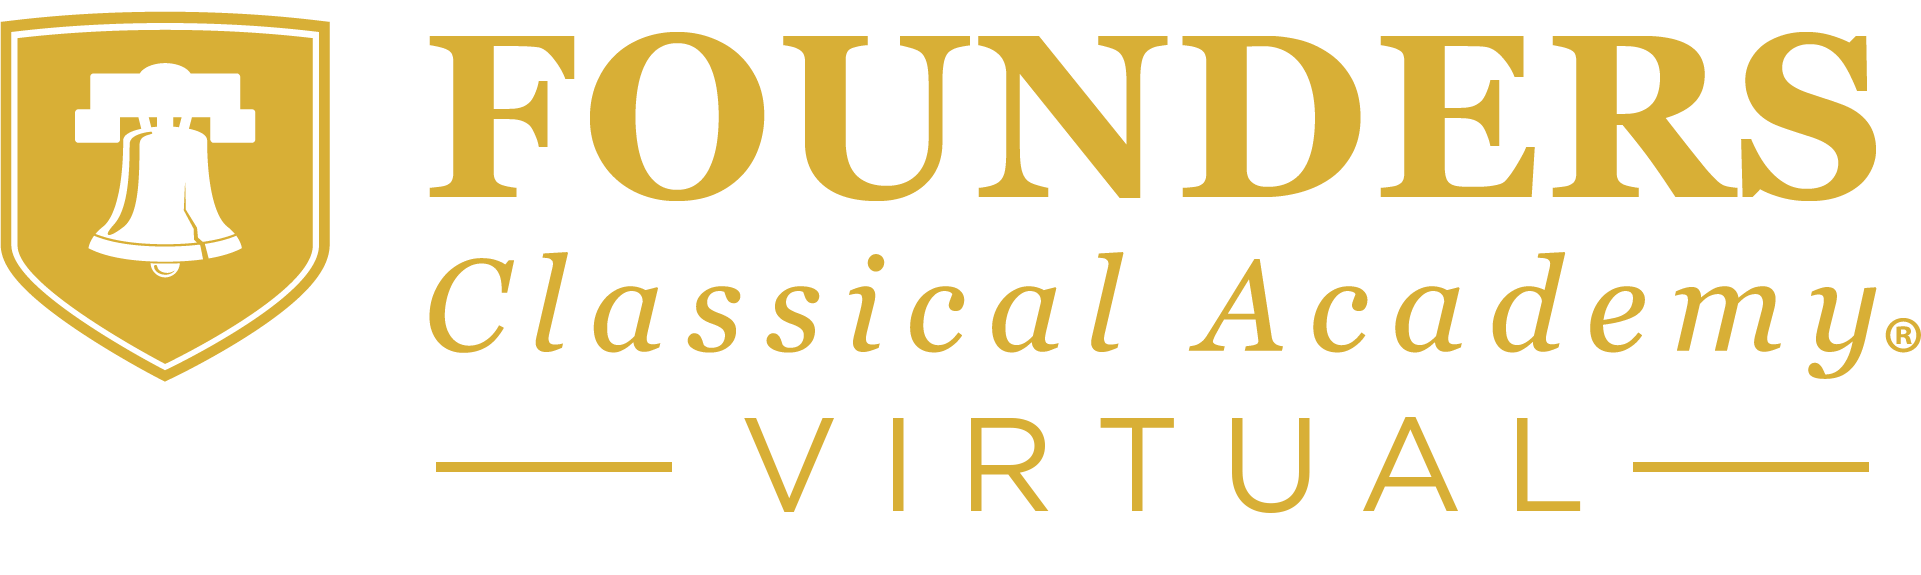 Founders Classical Academy Virtual logo